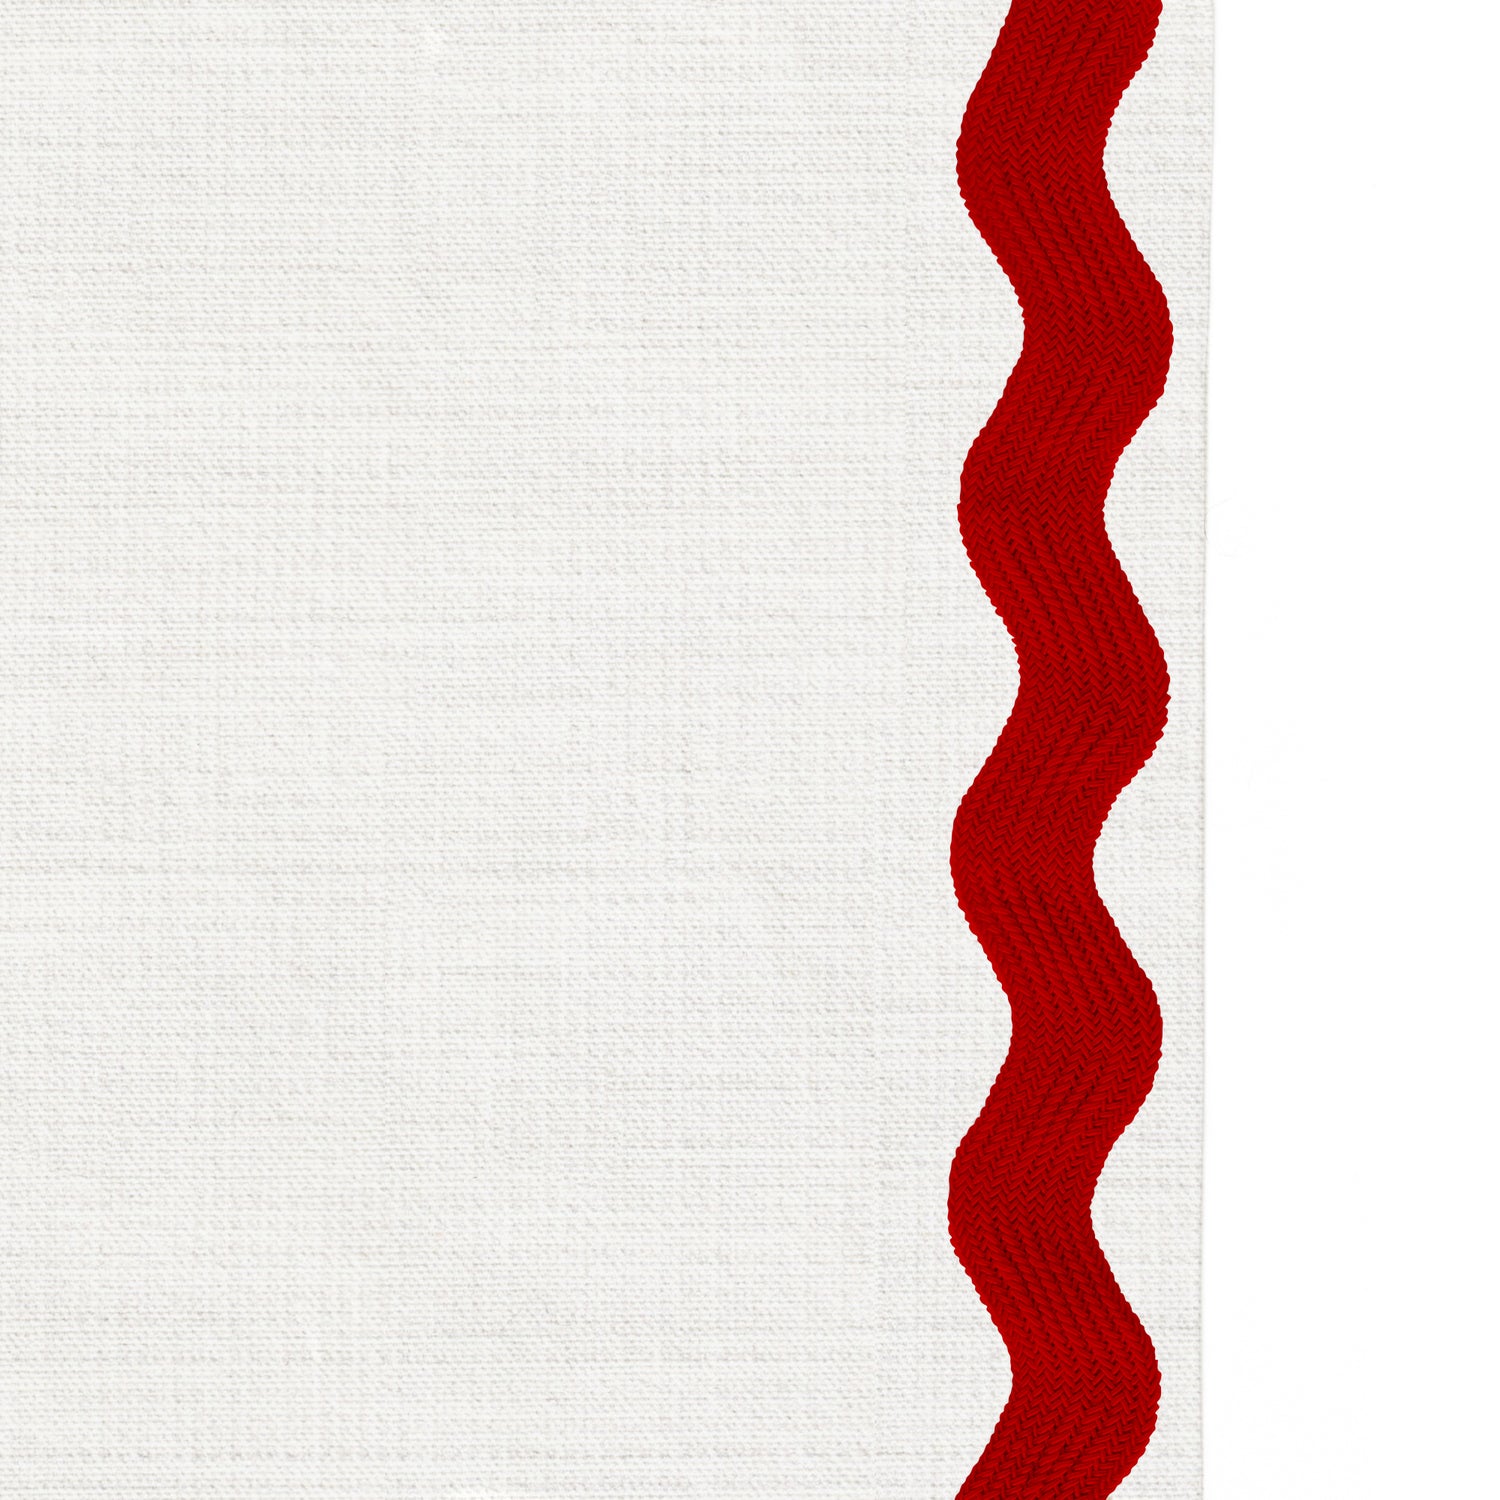 Upclose picture of Snow custom Whiteshower curtain with cherry rick rack trim